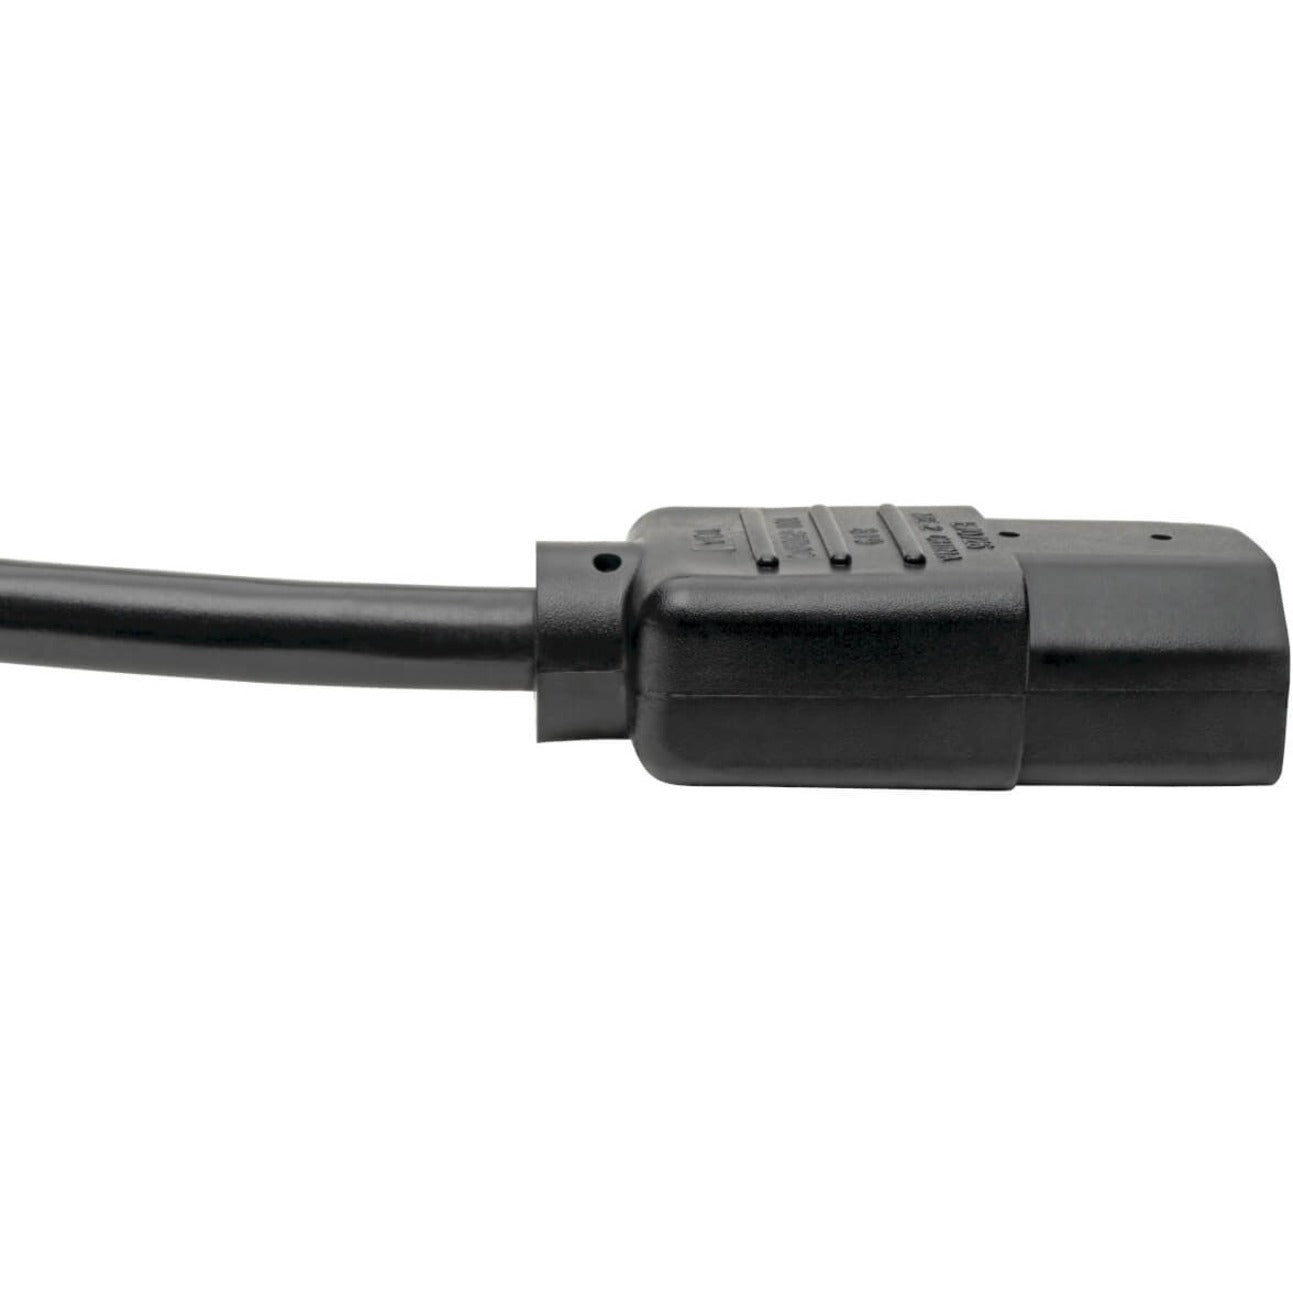 Tripp Lite P010-012 Universal AC Power Replacement Cord, 12 ft, Black